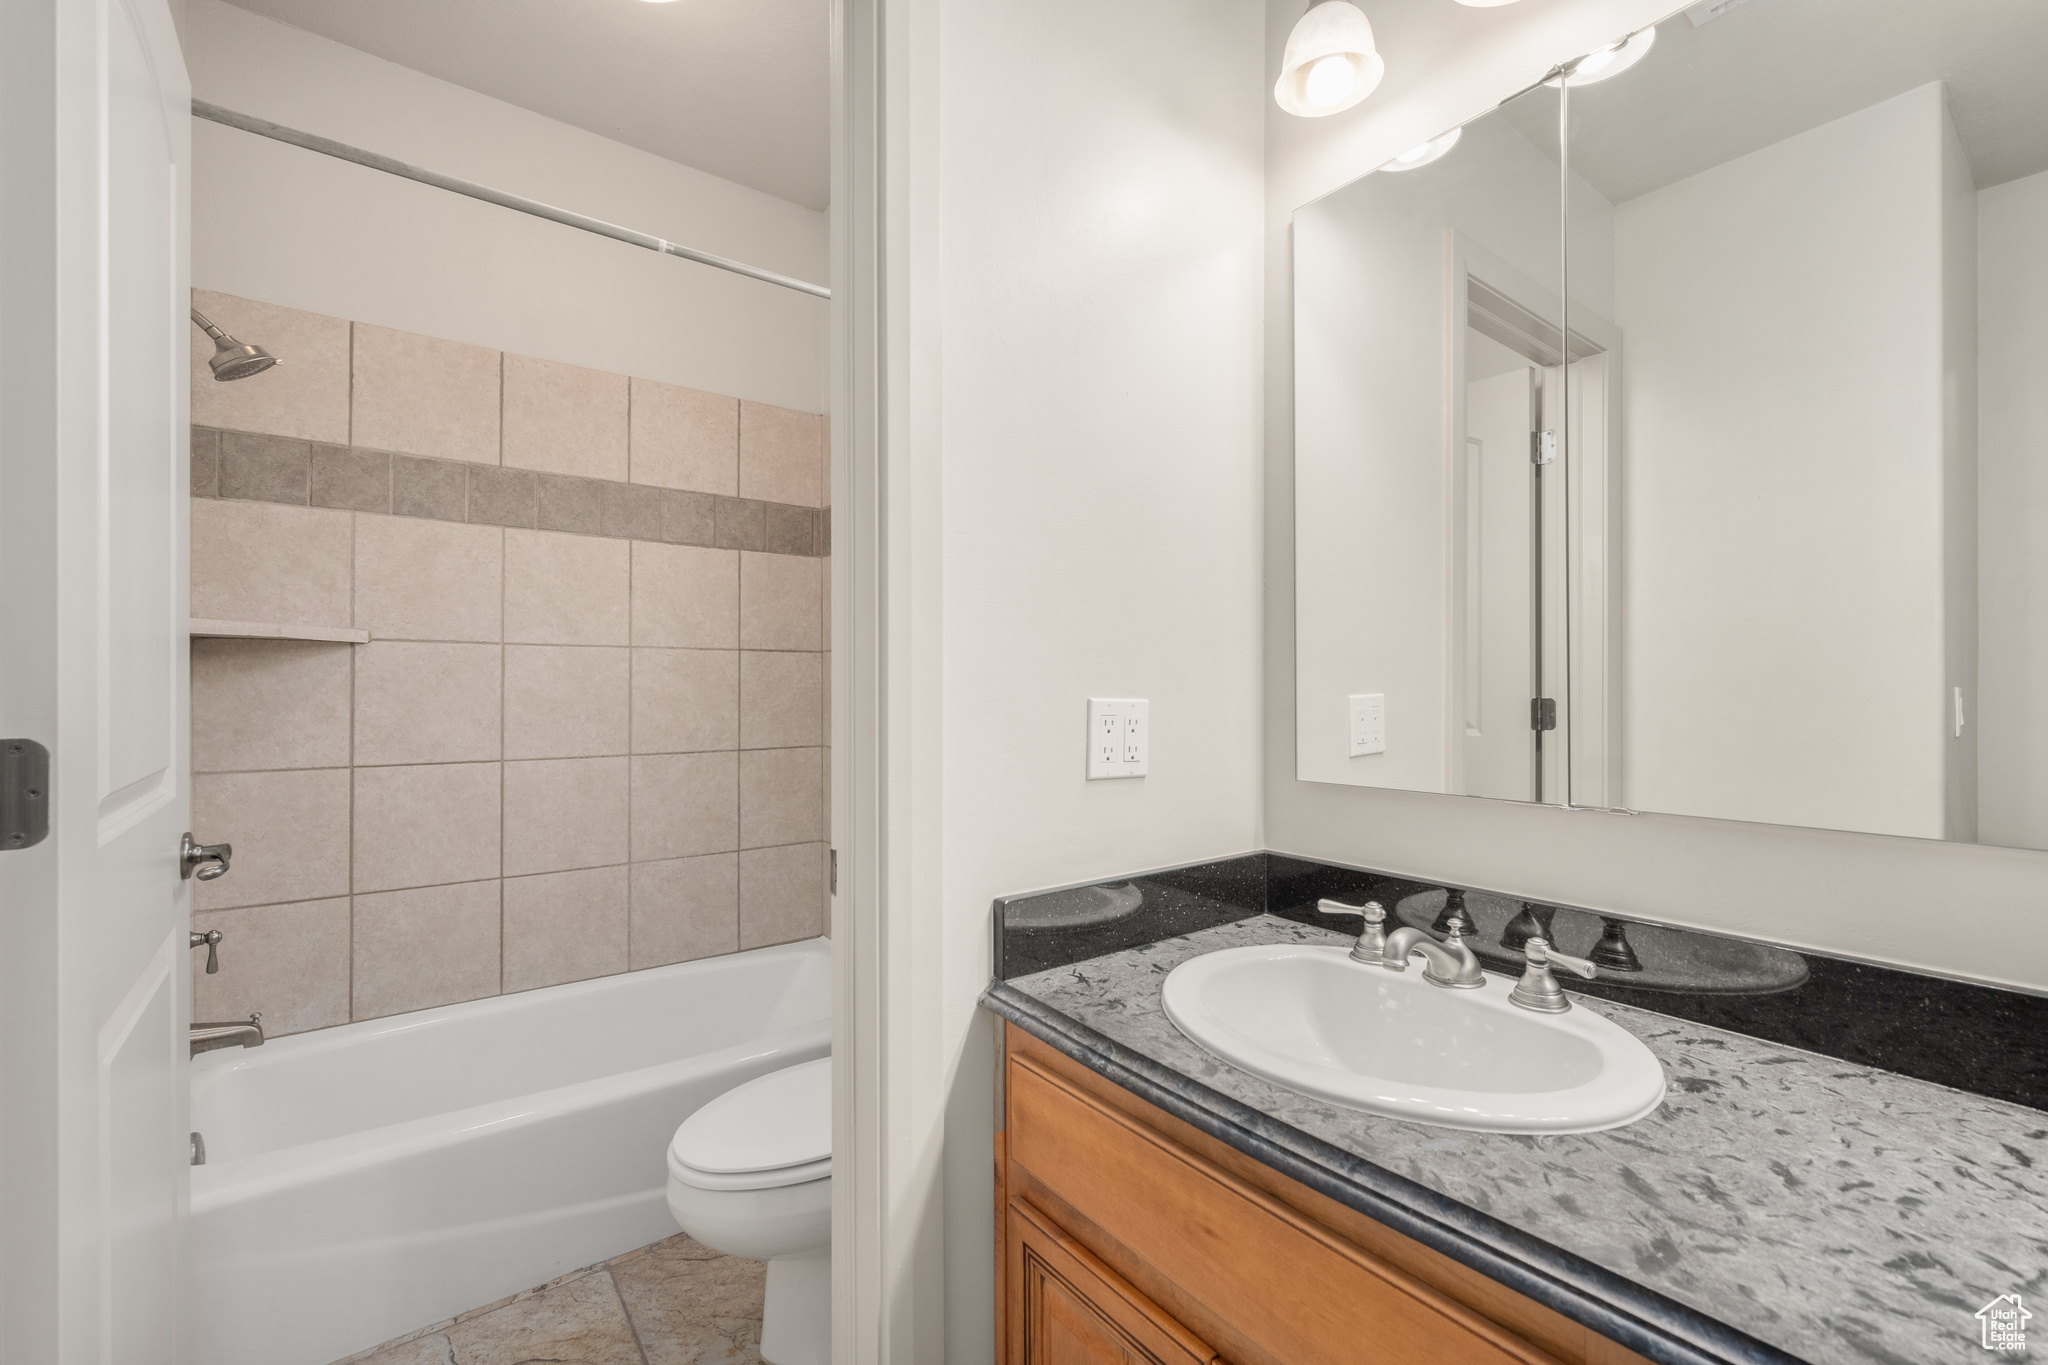 Full bathroom featuring tile floors, tiled shower / bath, oversized vanity, and toilet